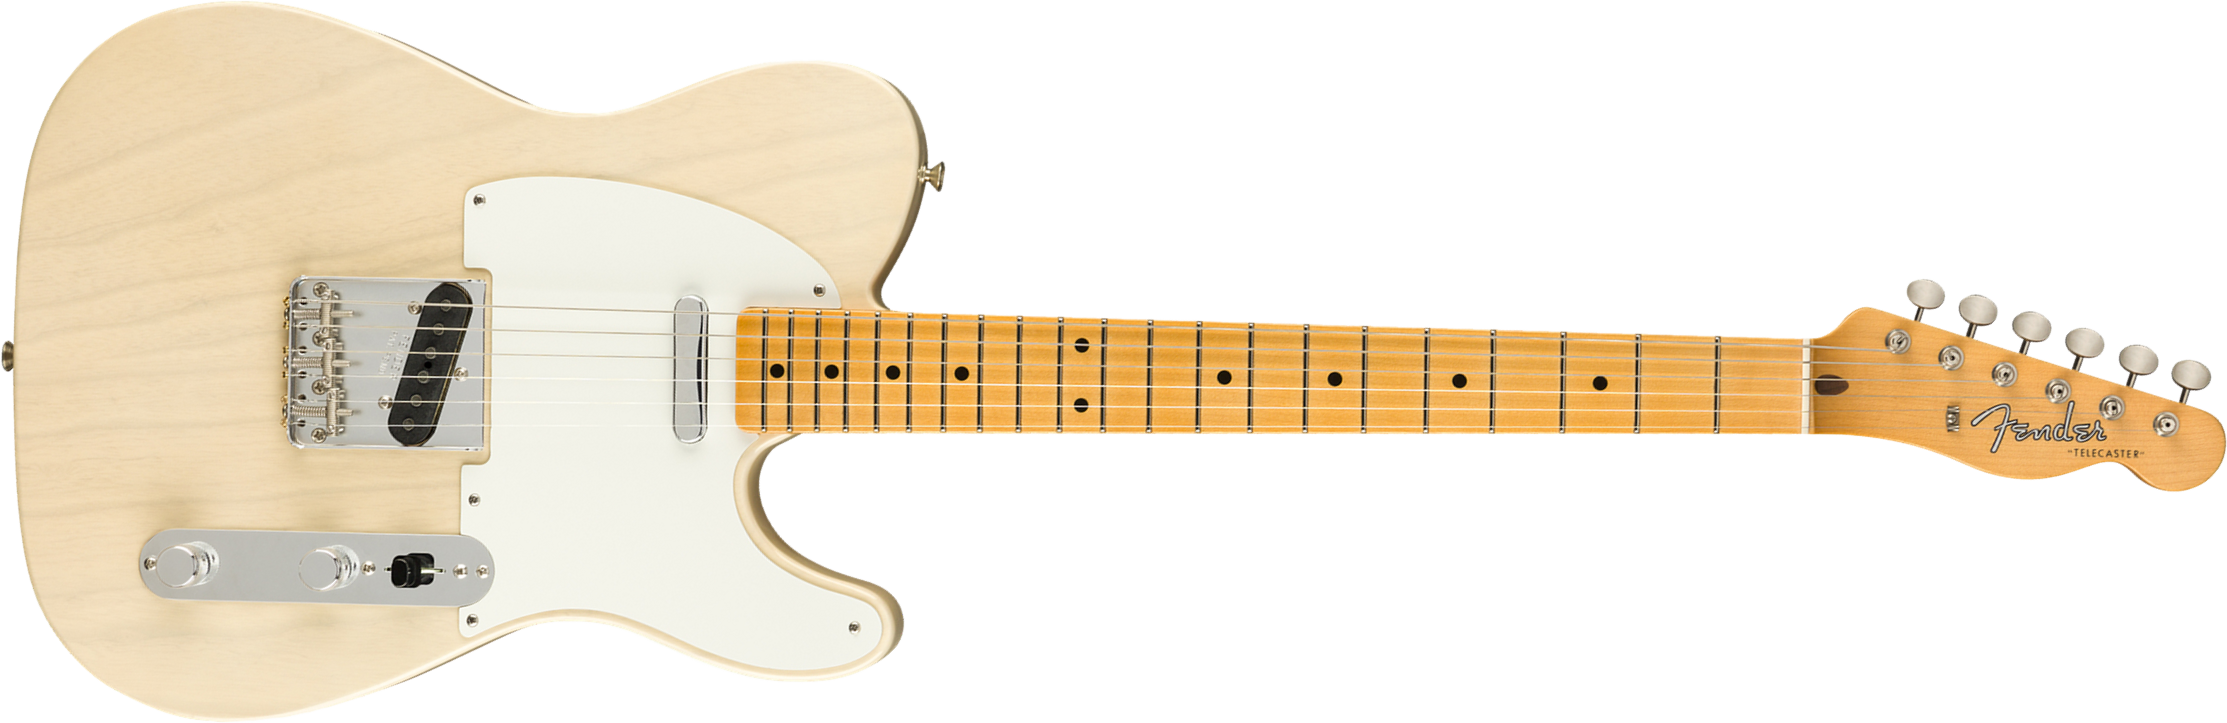 Fender Custom Shop Tele Vintage Custom 1958 Top Load Ltd Mn - Nos Aged White Blonde - Televorm elektrische gitaar - Main picture